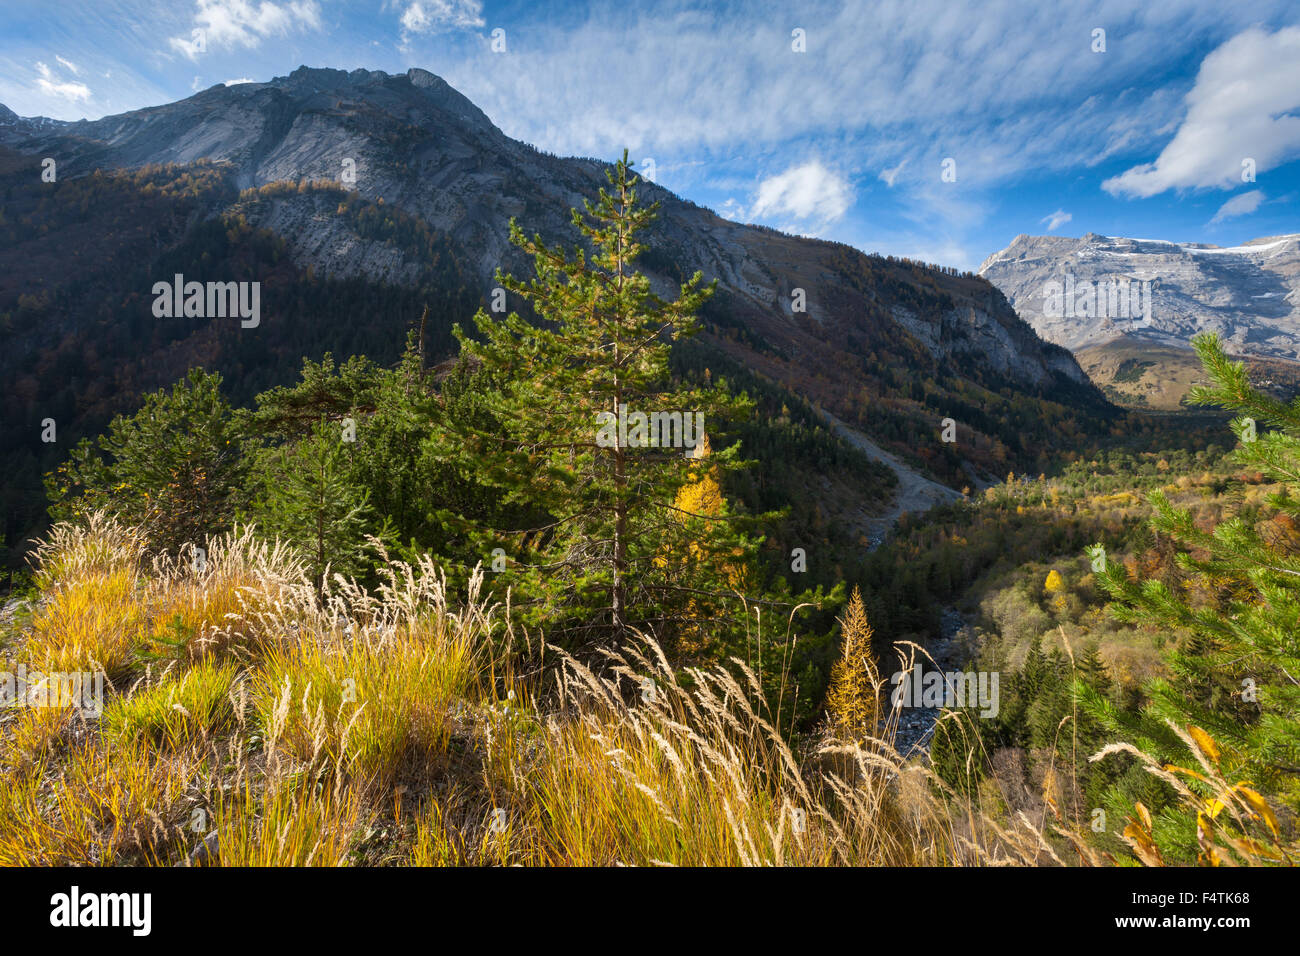 Derborence, Svizzera canton Vallese, legno, foresta, valley, autunno Foto Stock